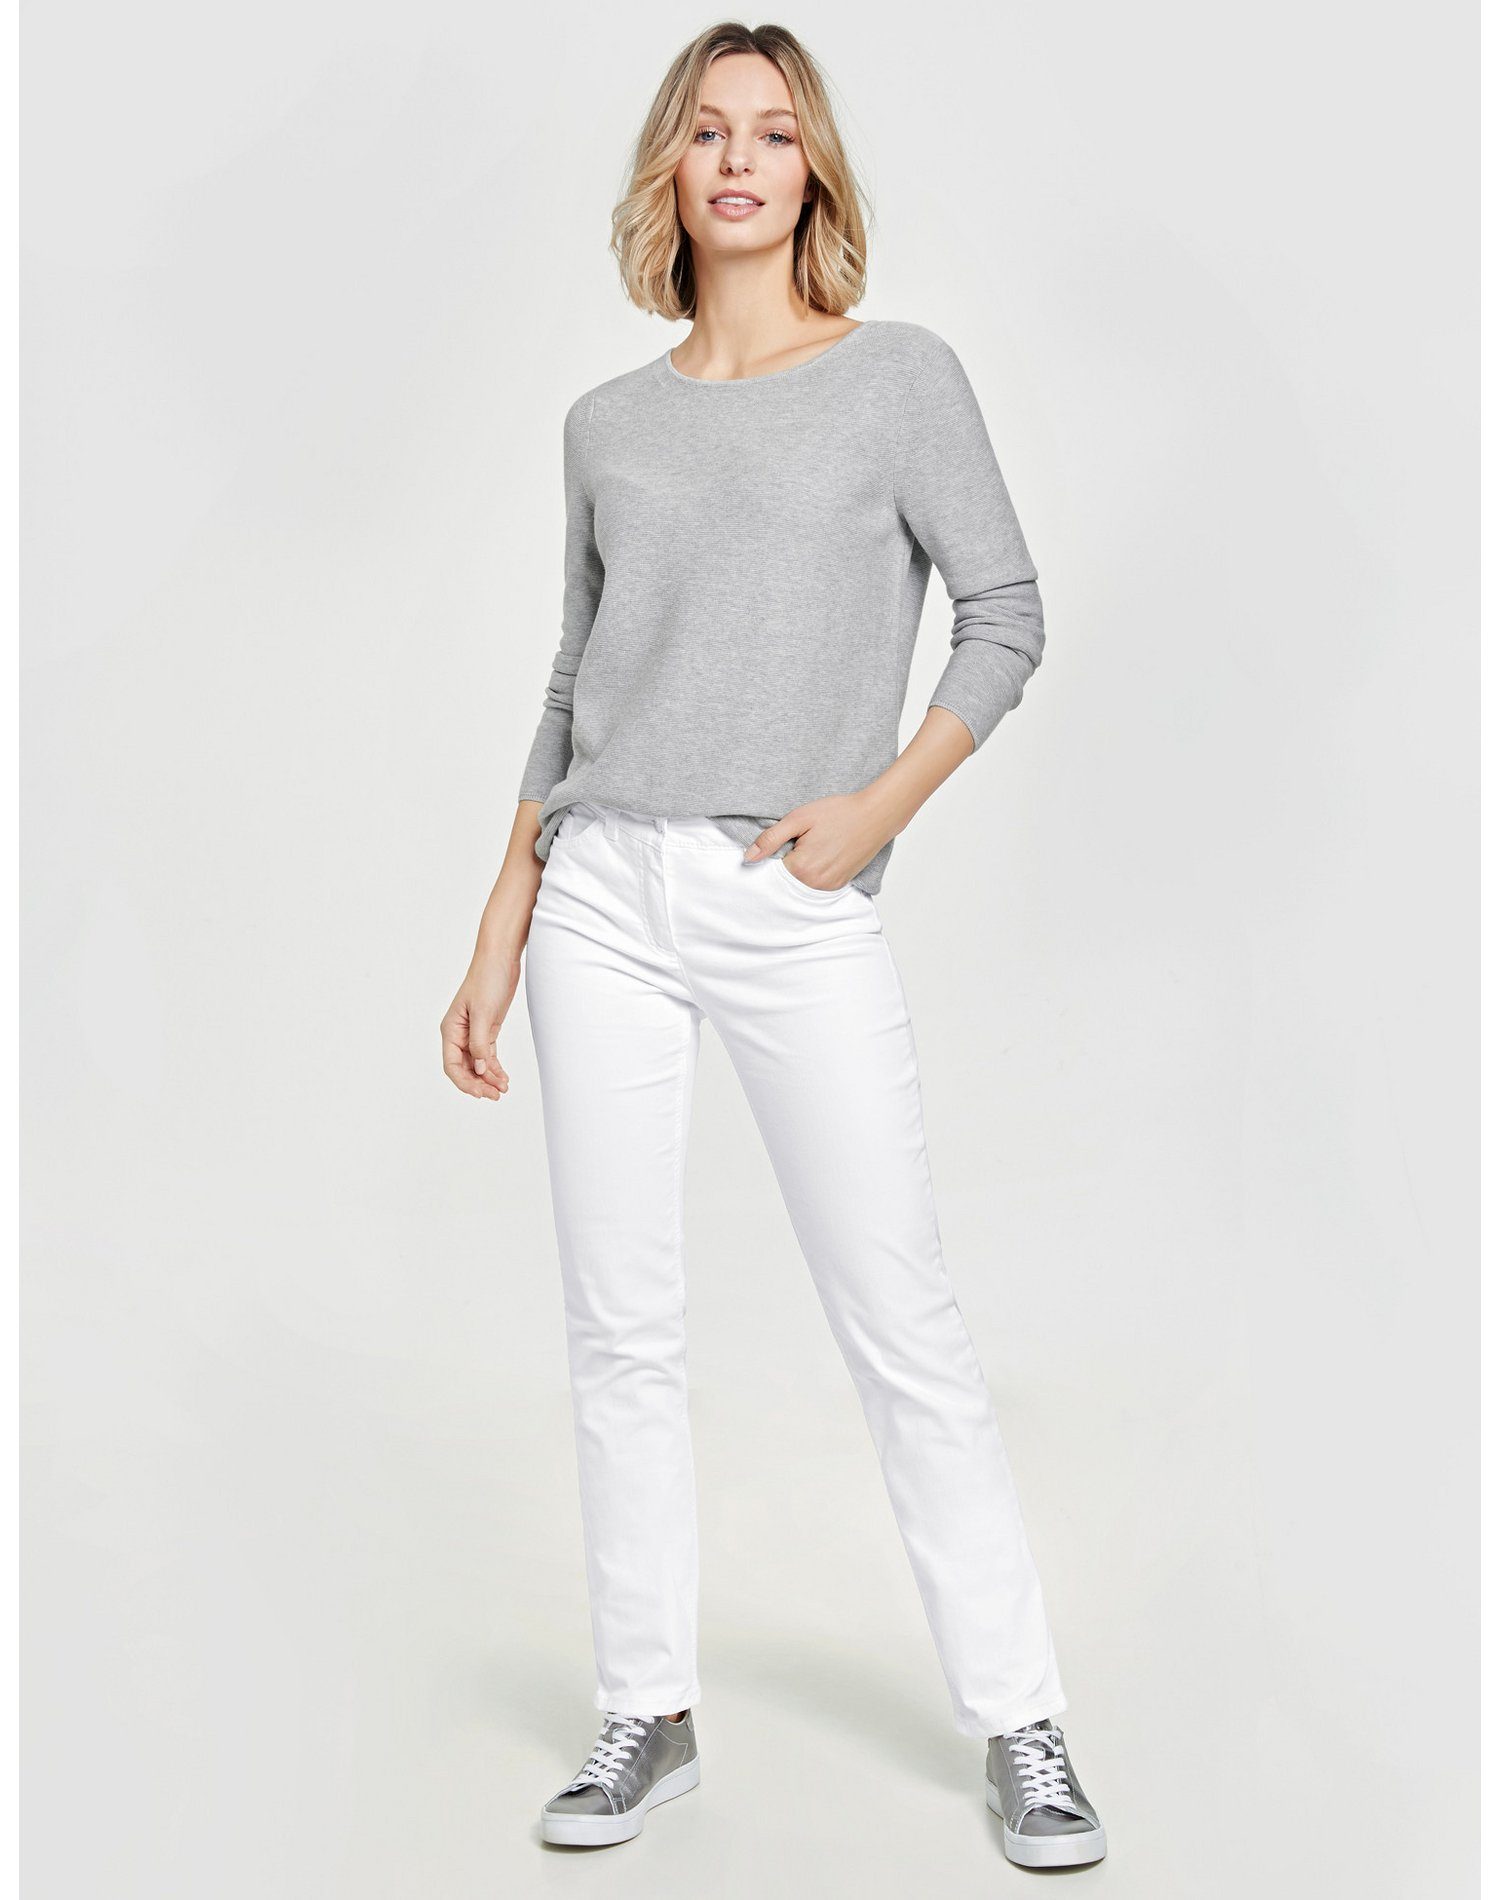 GERRY WEBER Best4me Hose Stretch-Jeans 5-Pocket weiß/weiß Figurformende